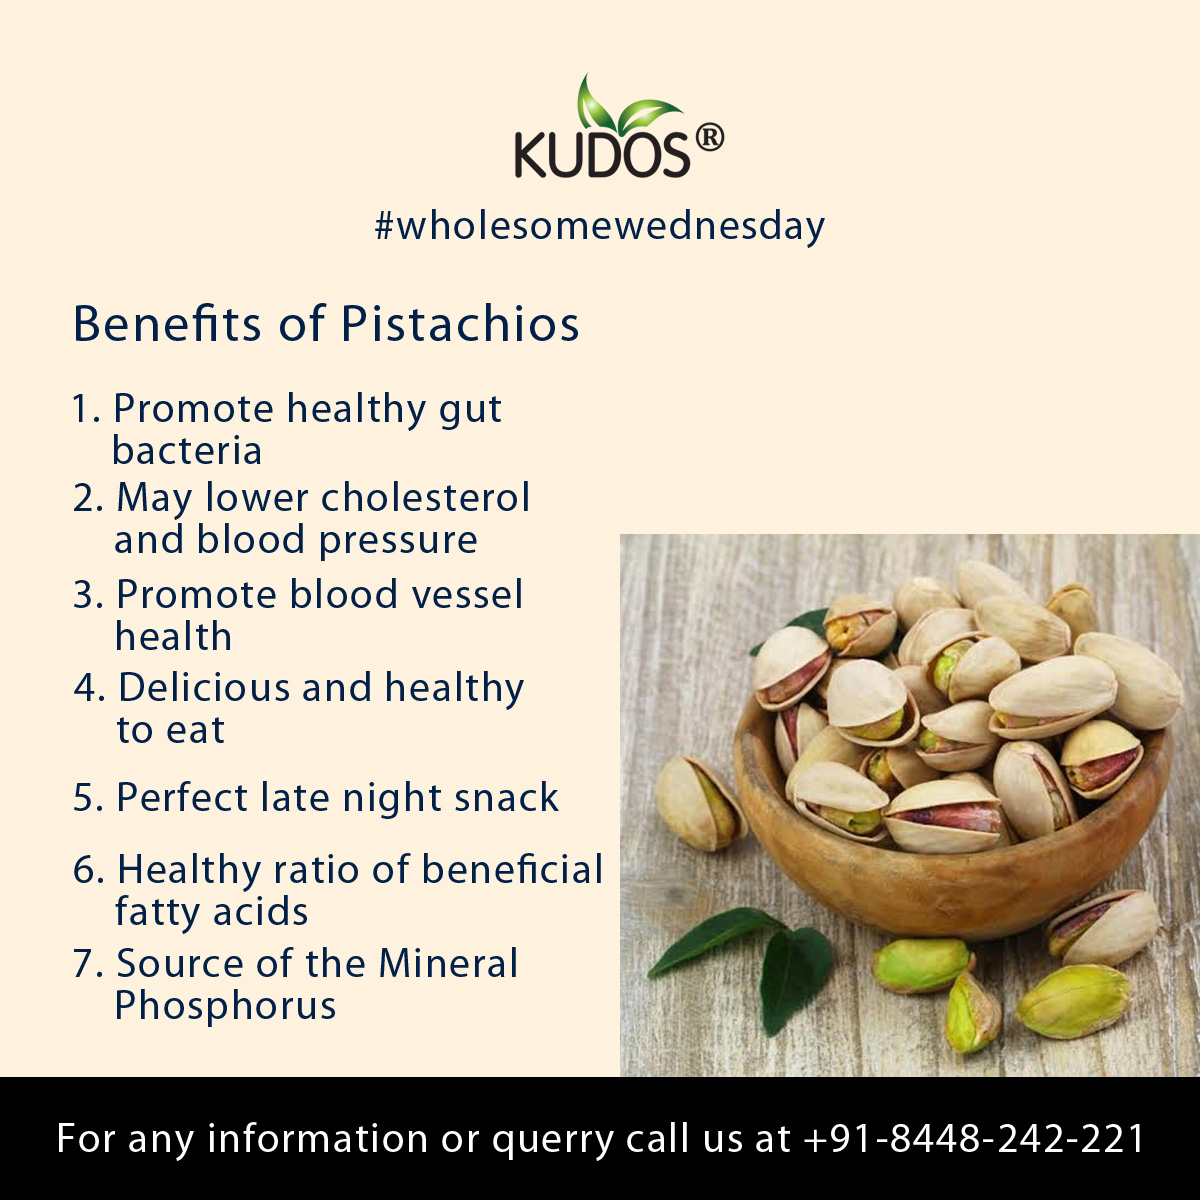 9 Health Benefits of Pistachios